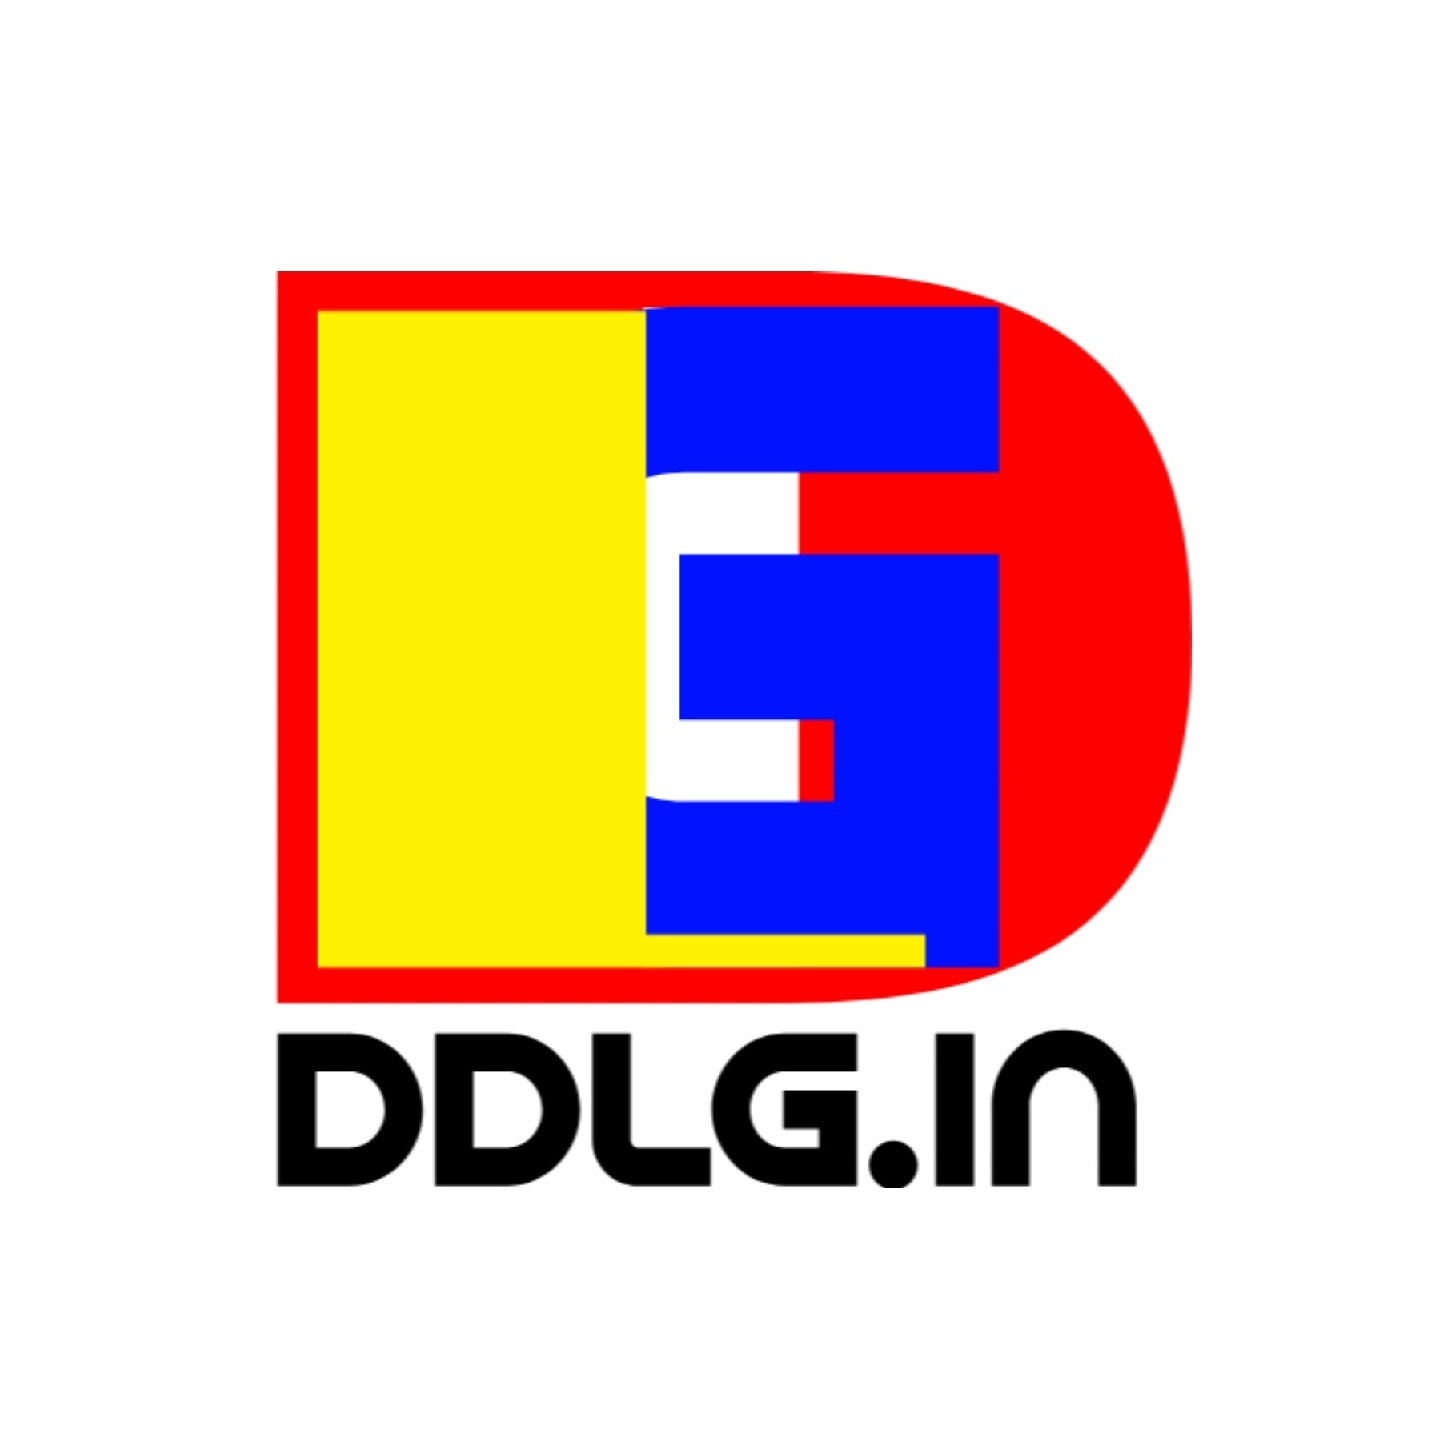 Digital Design and Development Leadership Group